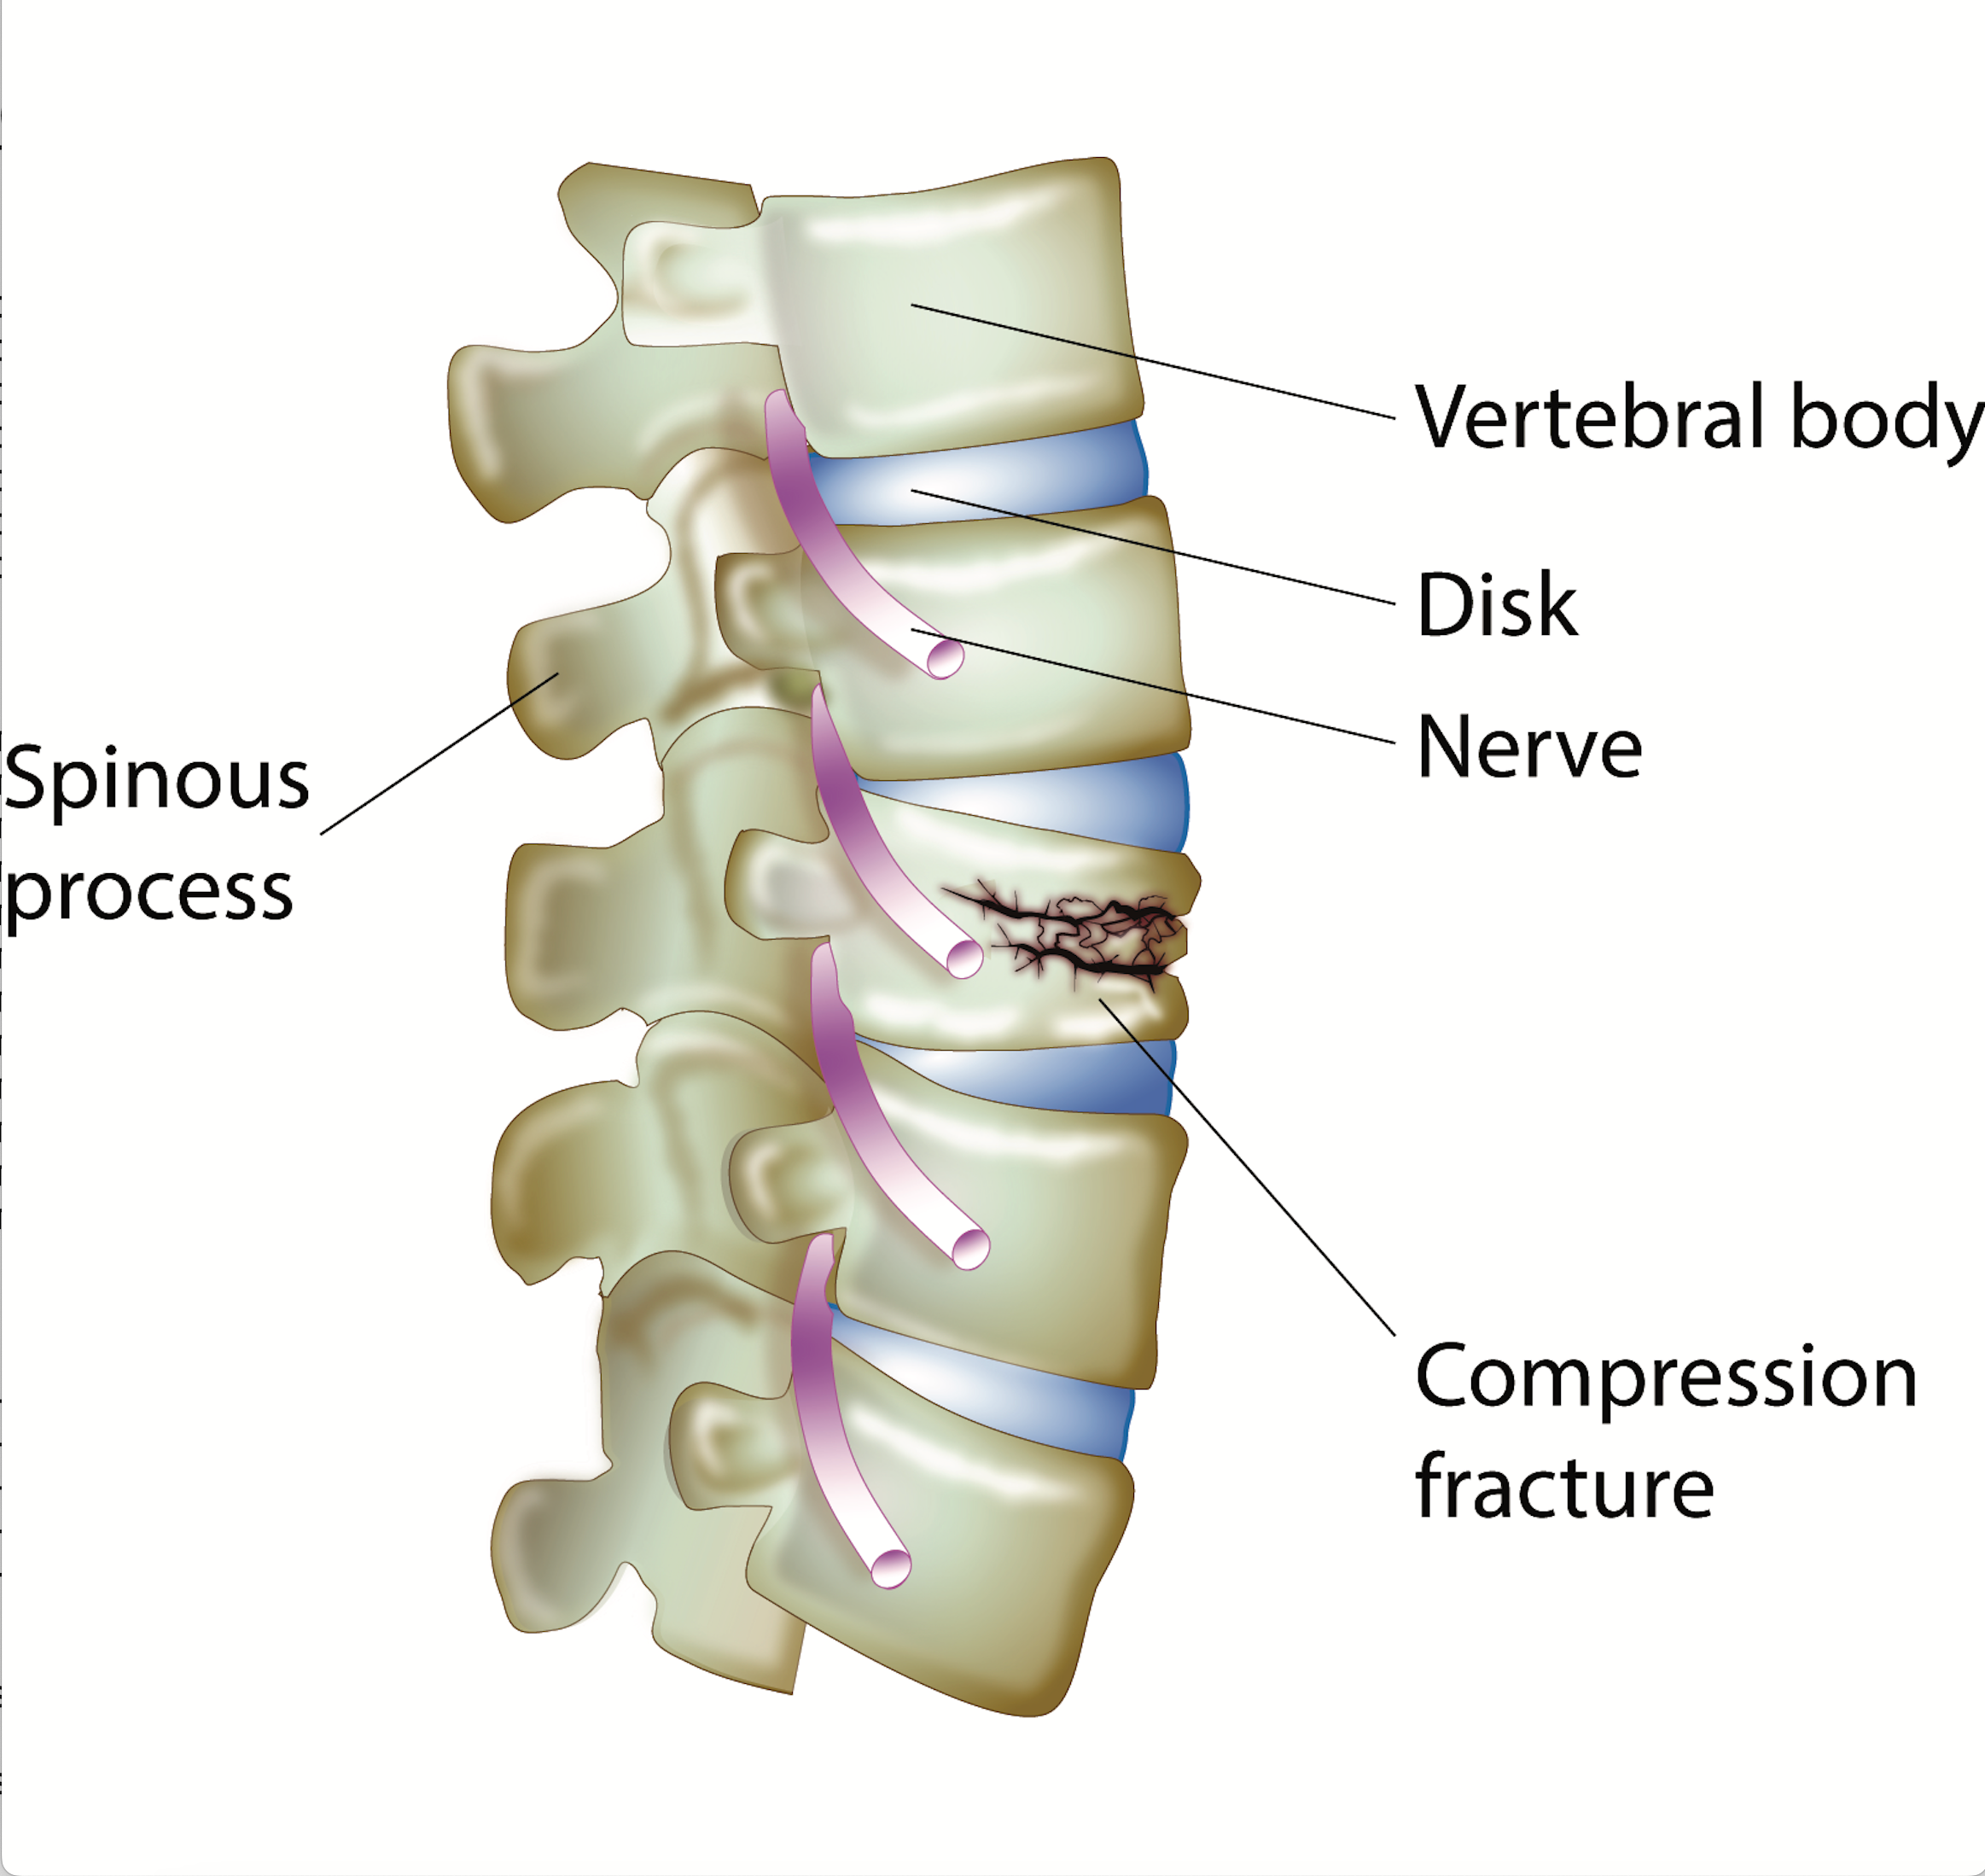 Vertebral Compression Fractures - Symptoms and Treatments